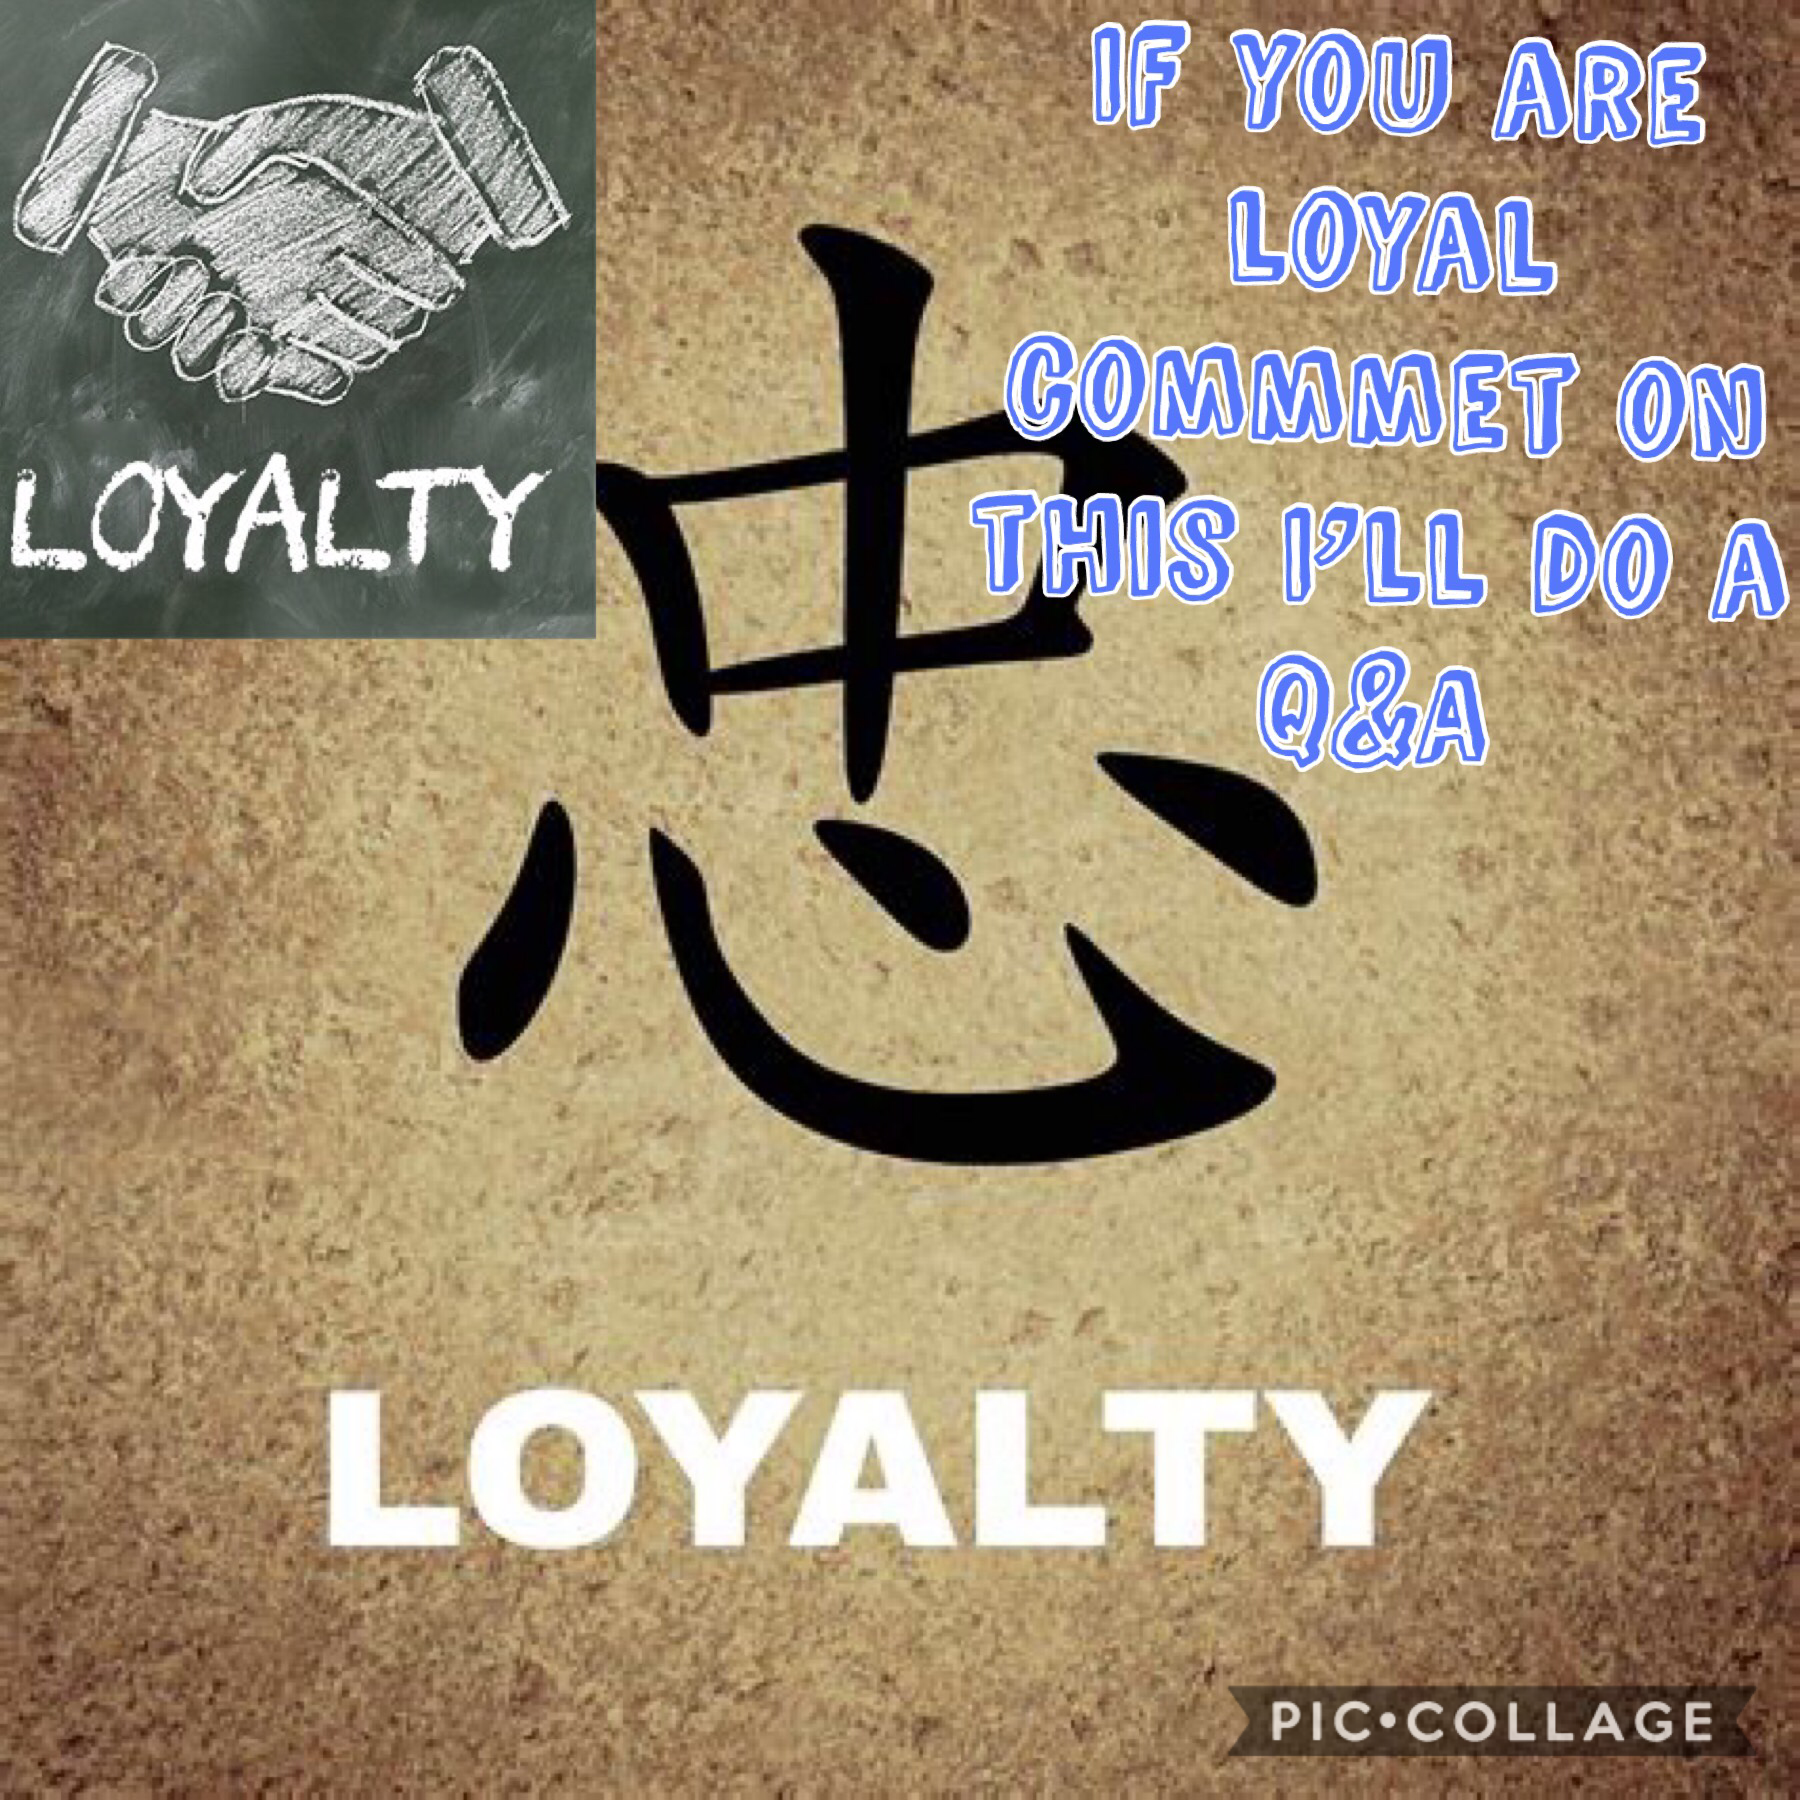 #loyal #followforfollow  #comment #Q&A